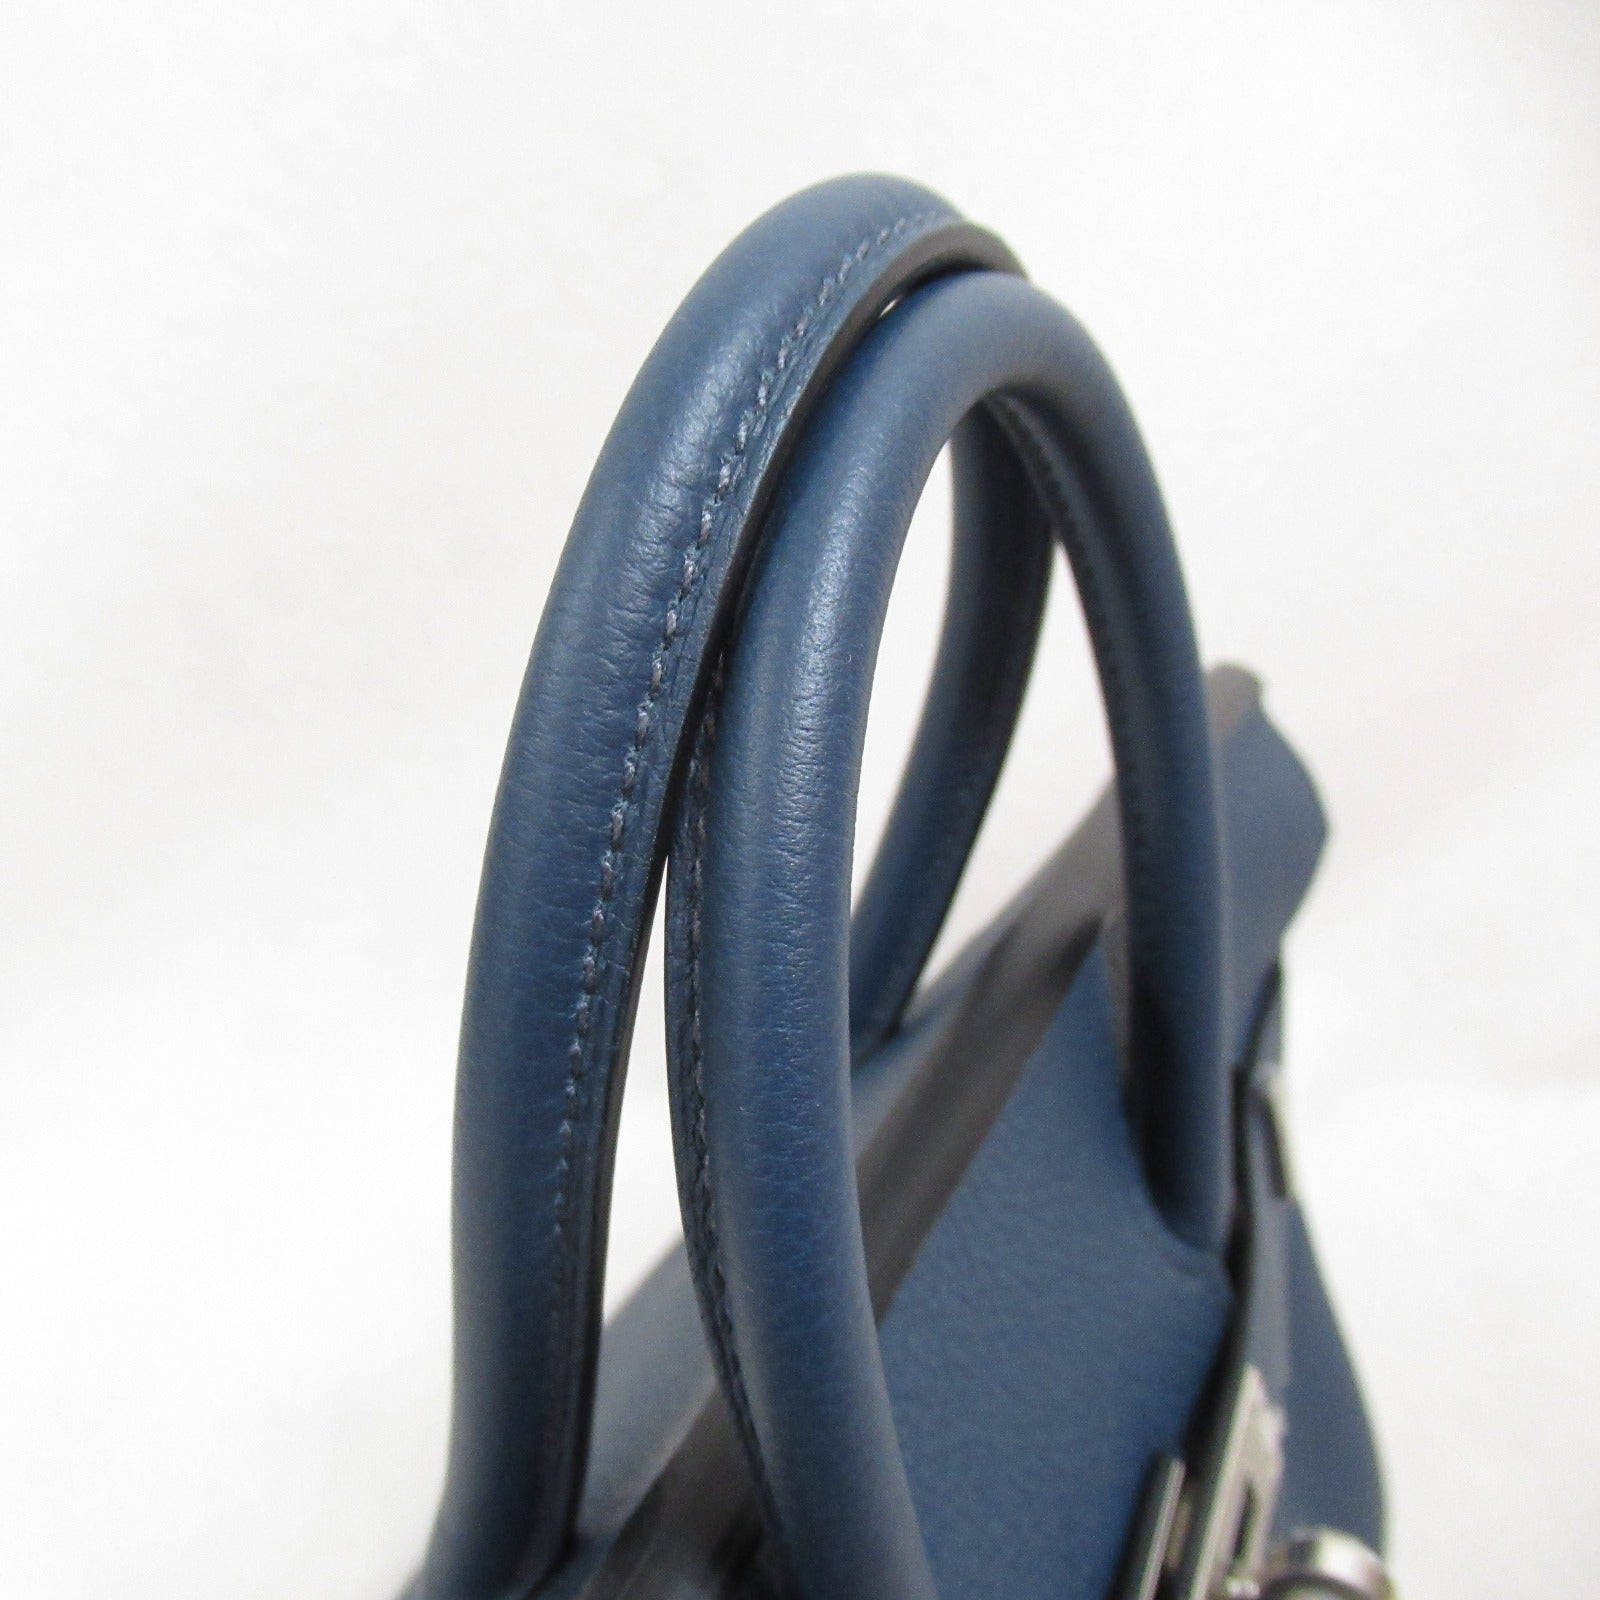 Hermes Birkin 25 Bridgestone Handbag Handbag Handbag Leather Togo  Blue